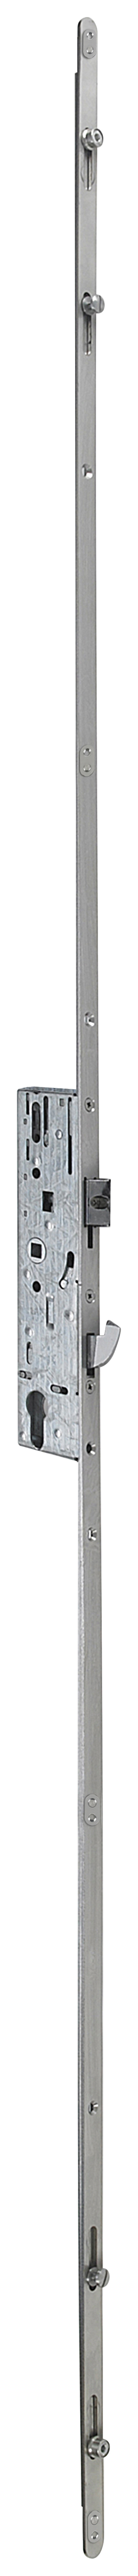 Yale YDM-UNI-PVCU-35 Replacement Pcvu Door Lock - Silver